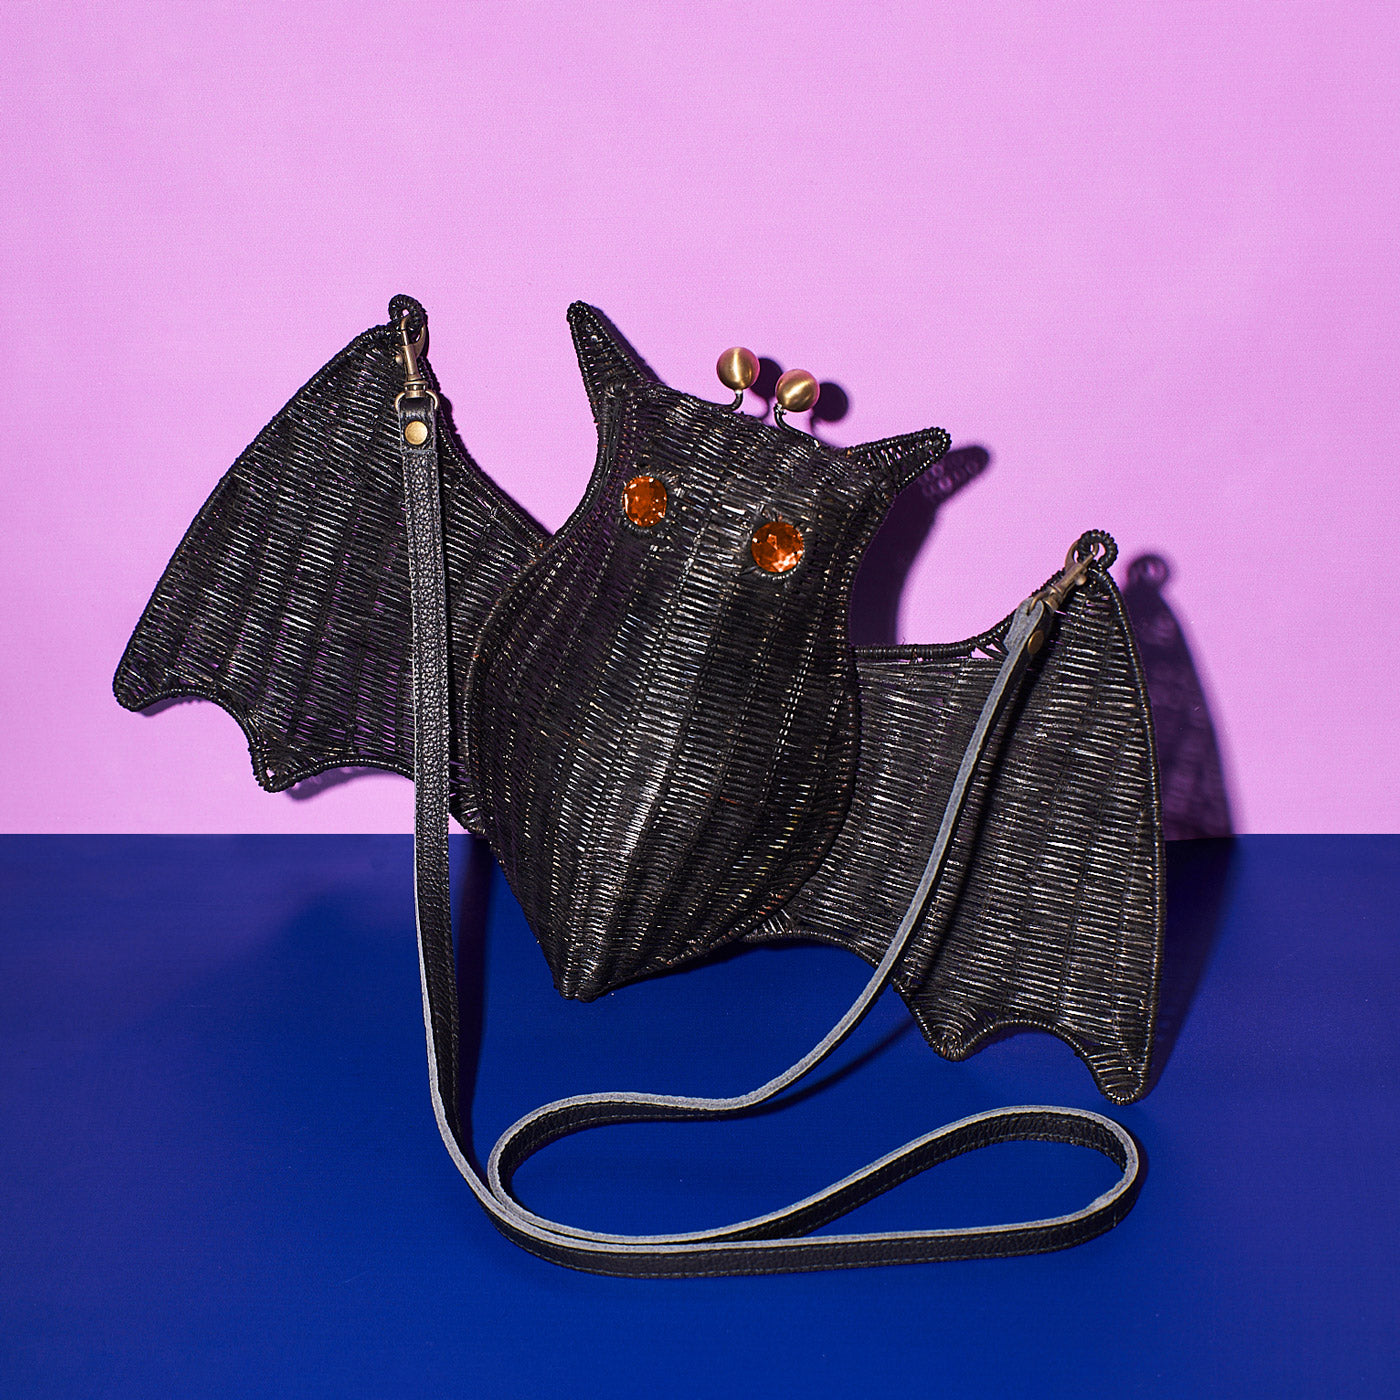 Wicker Darling's Elizabat Bathory the orange-eyed bat purse